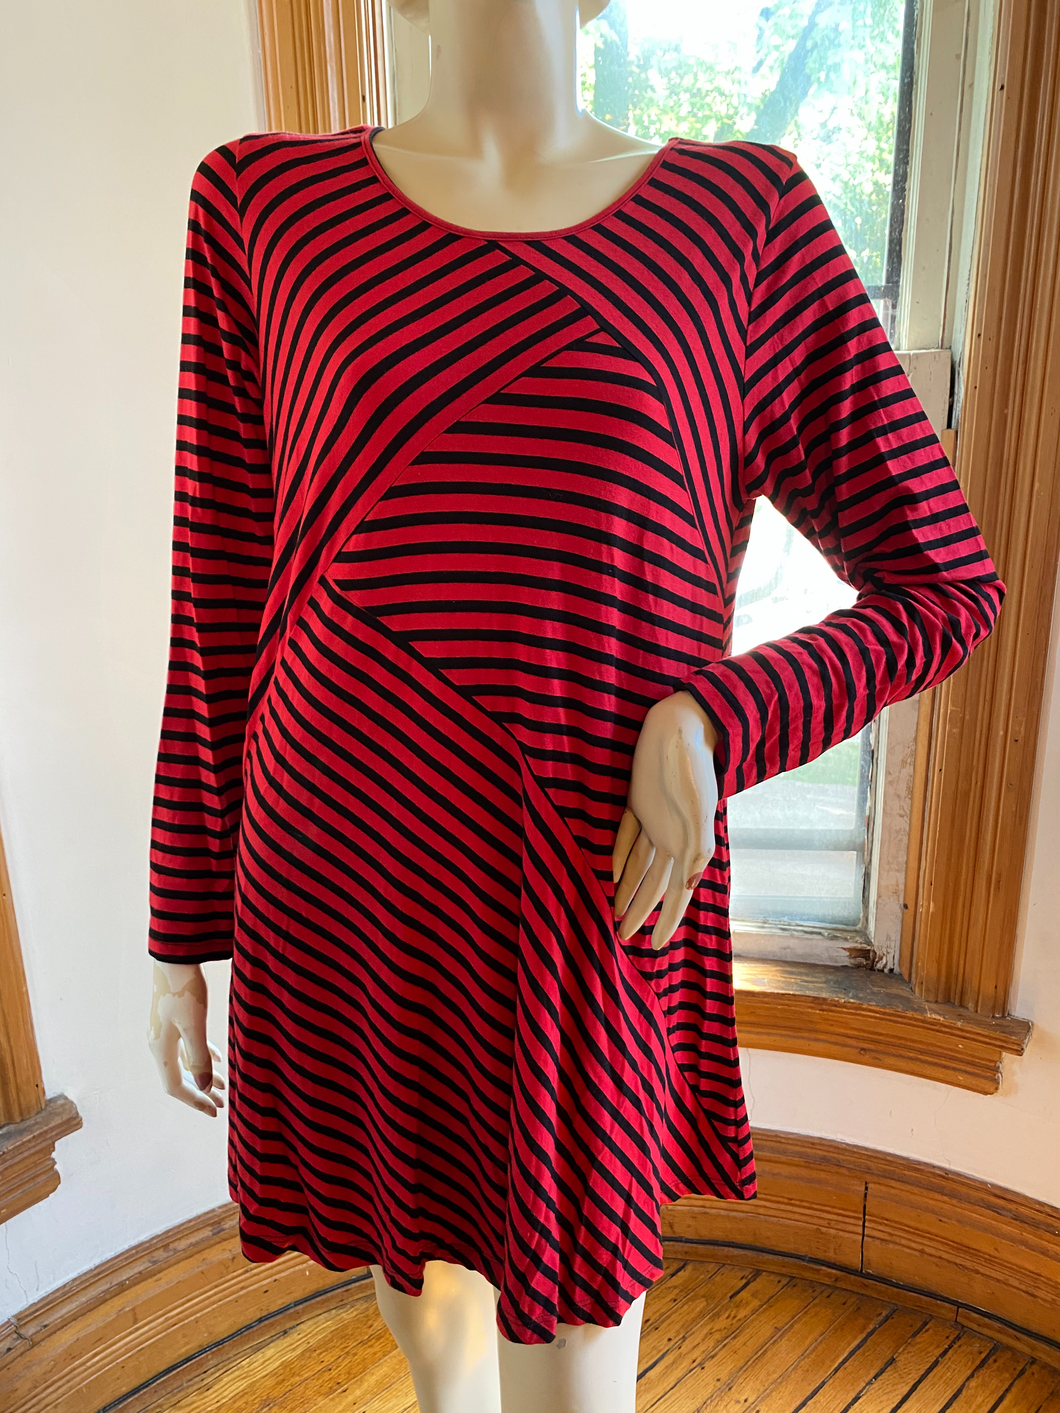 Comfy USA Red/Black Striped Knit Dress, size M